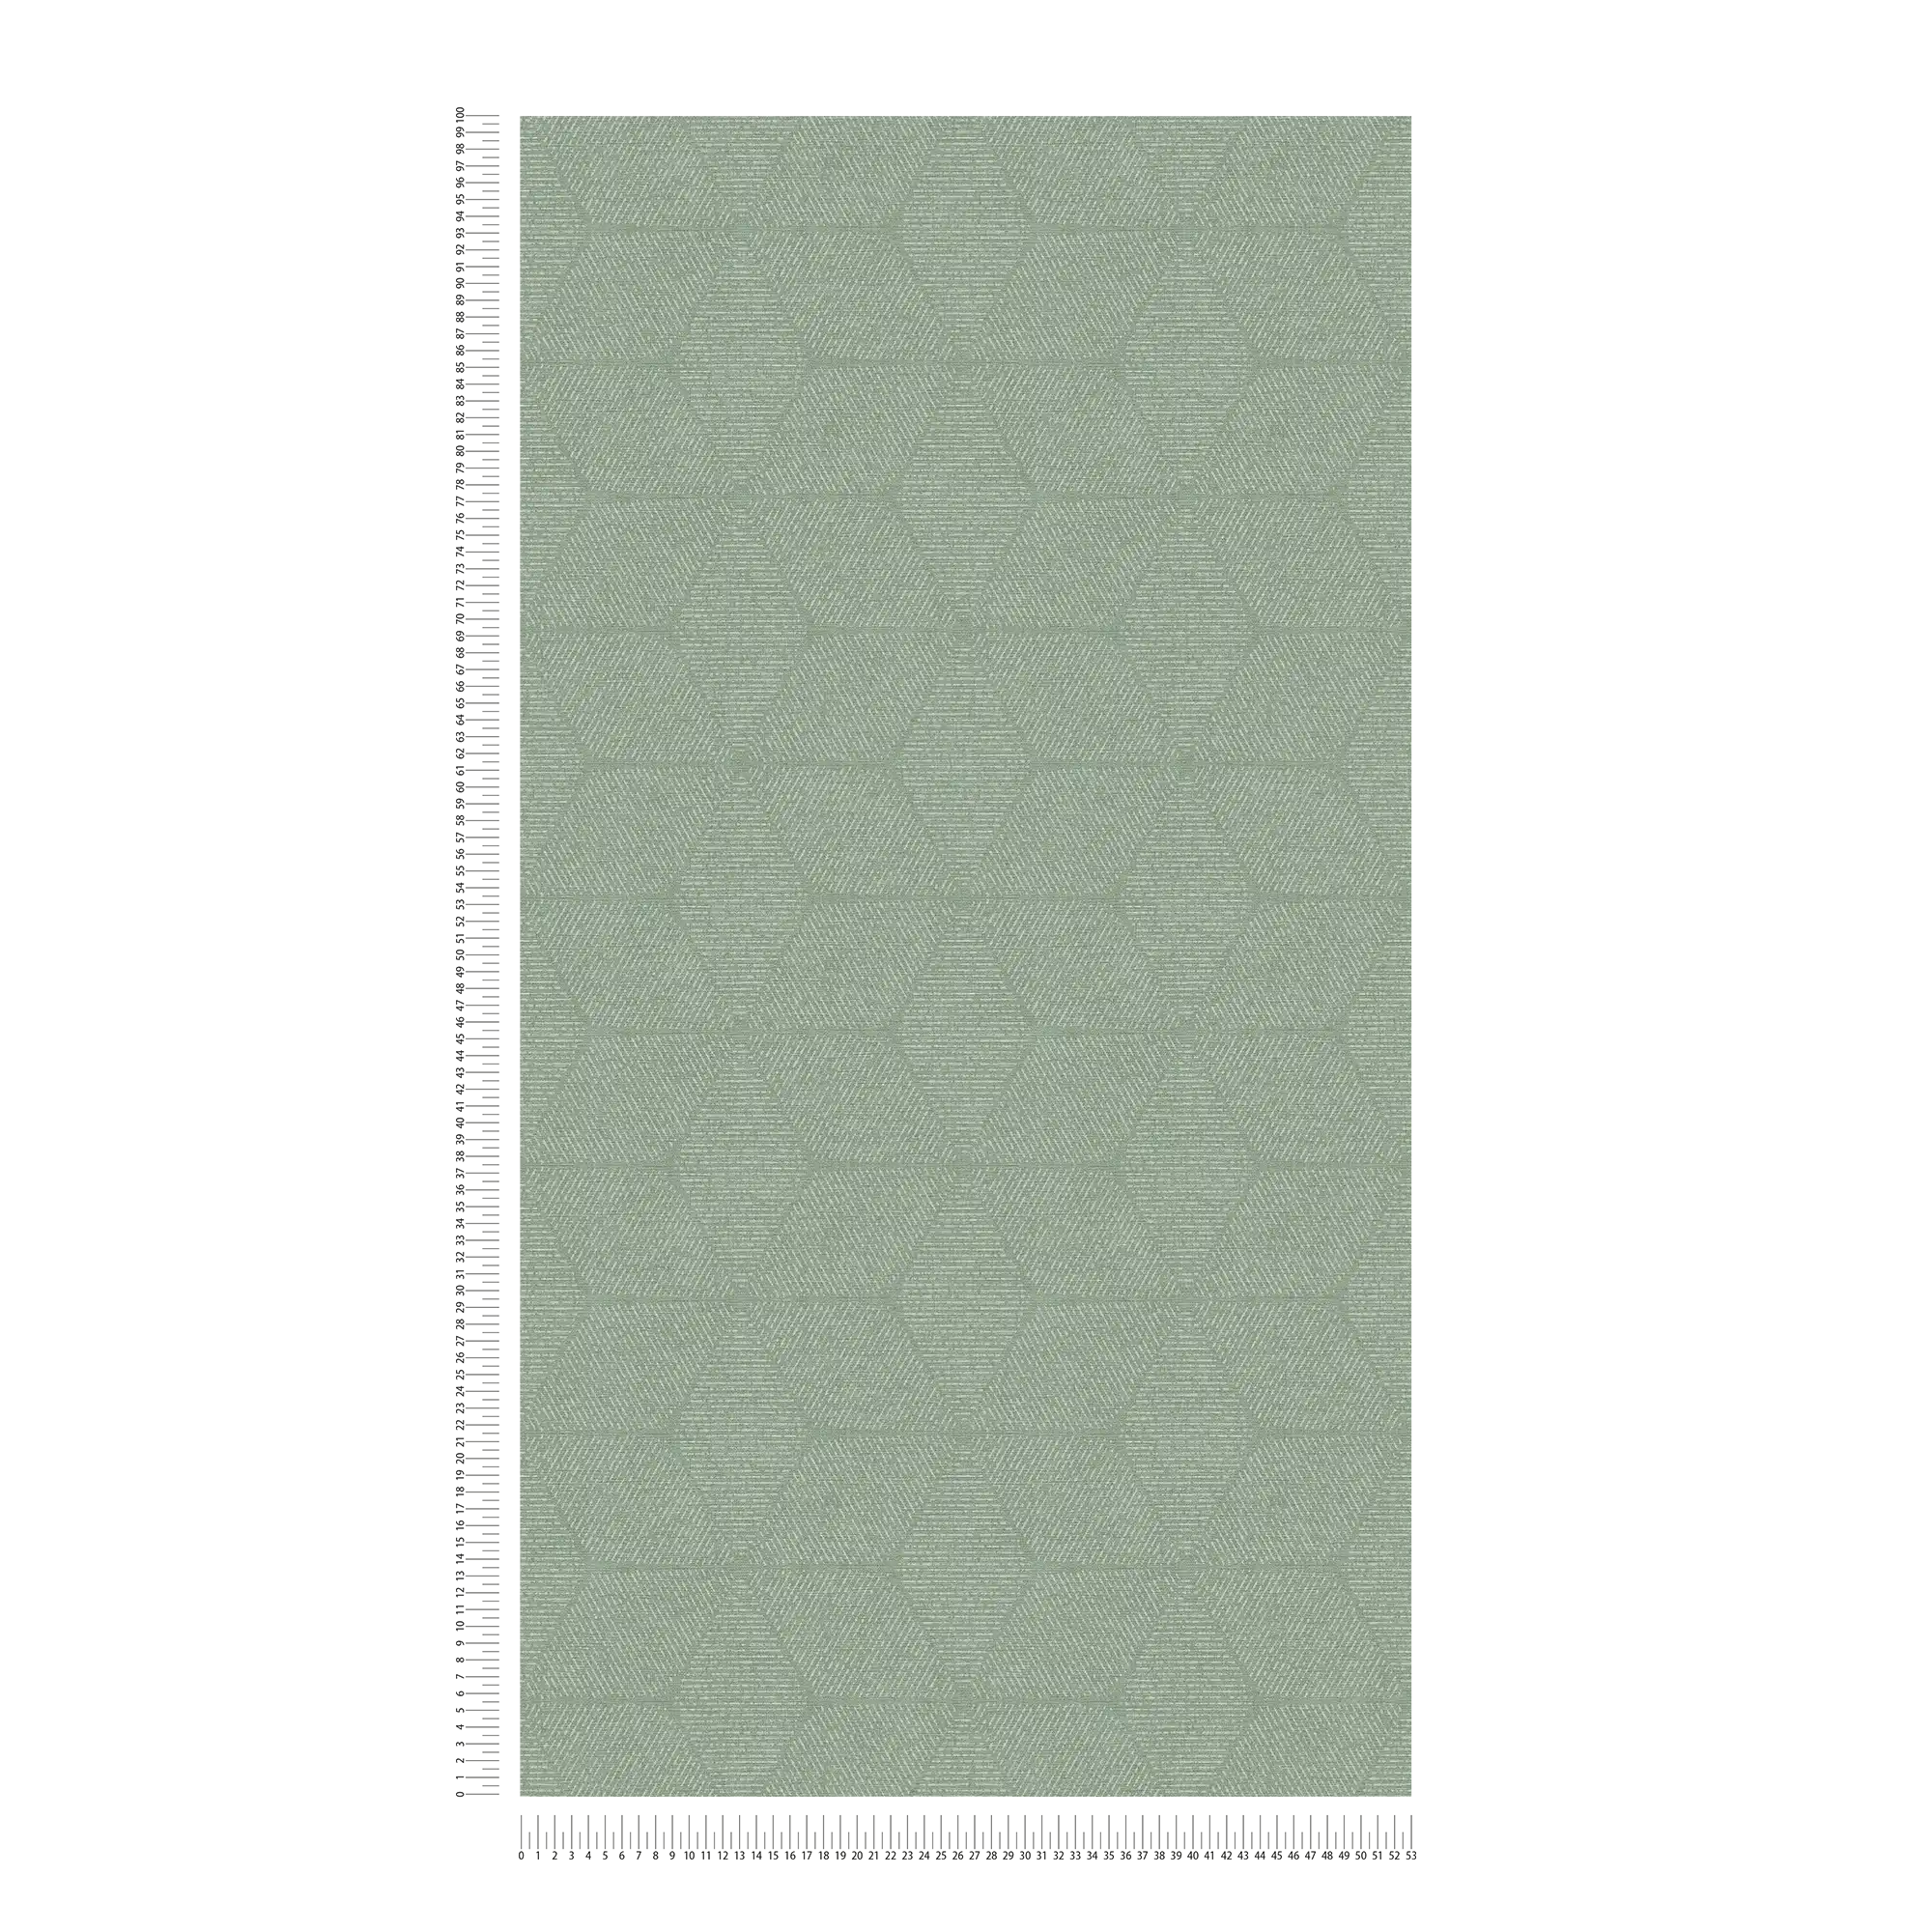             Carta da parati in tessuto non tessuto a motivi floreali - verde, bianco
        